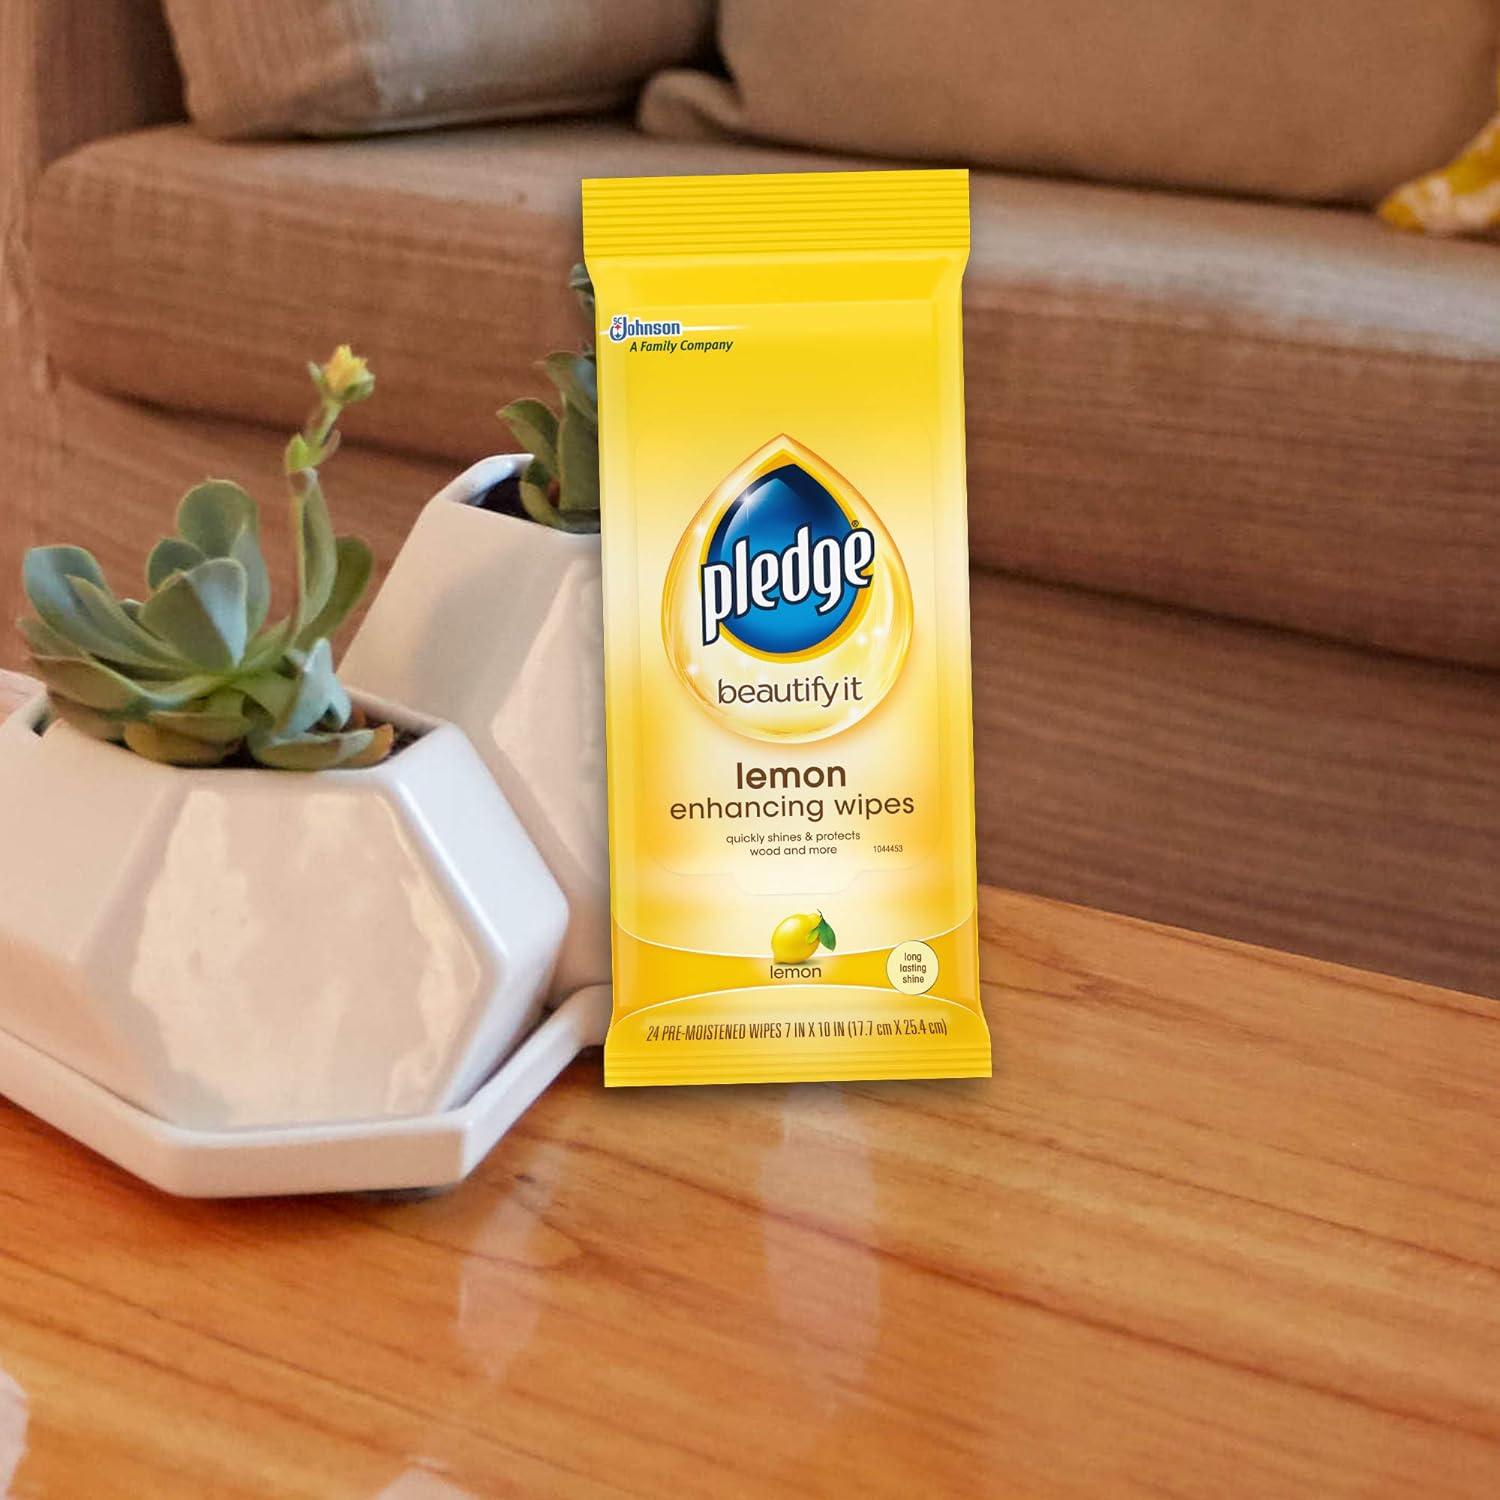 Pledge Beautify It Lemon Enhancing Wipes - Conveniently Dust Clean